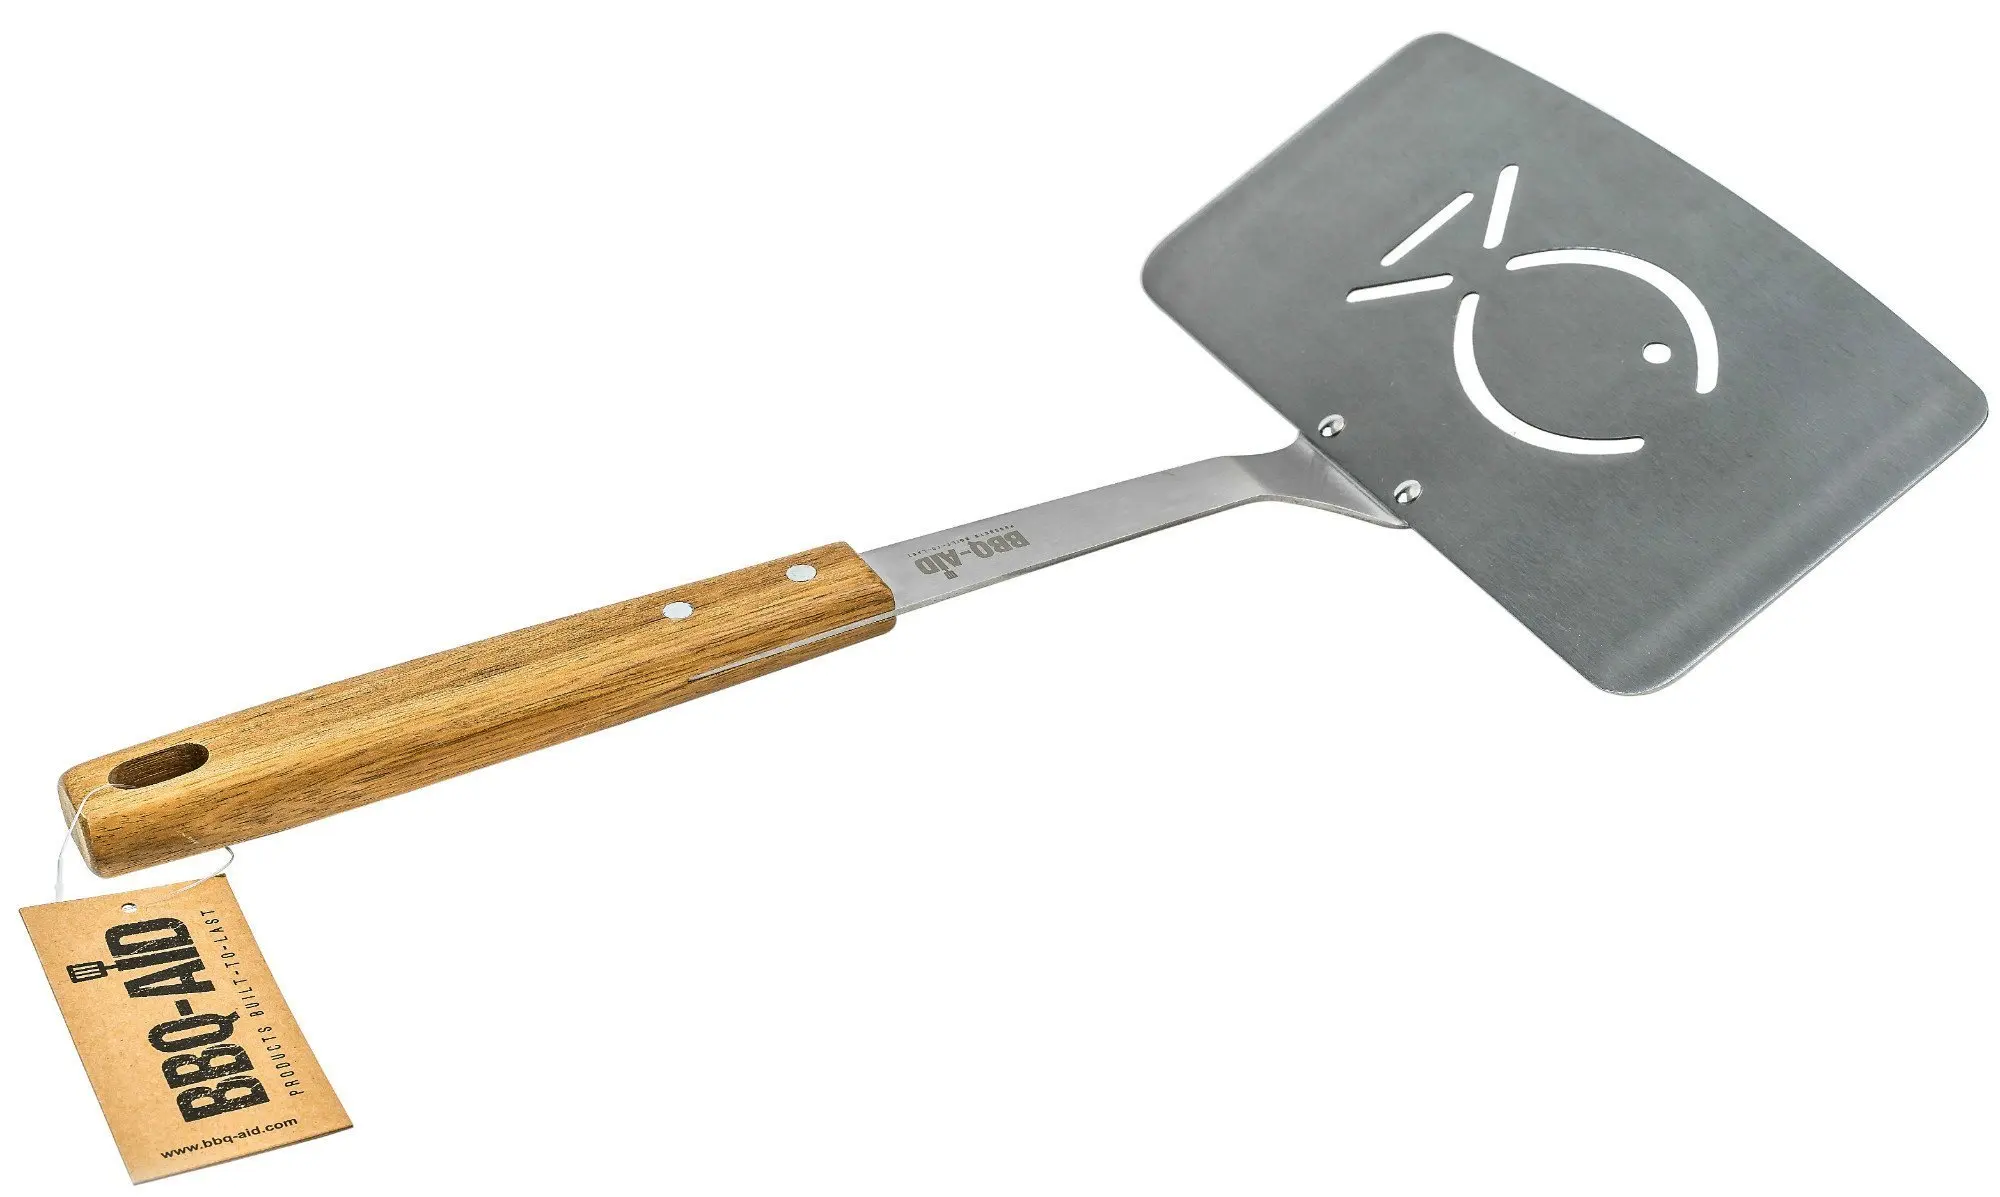 large metal spatula